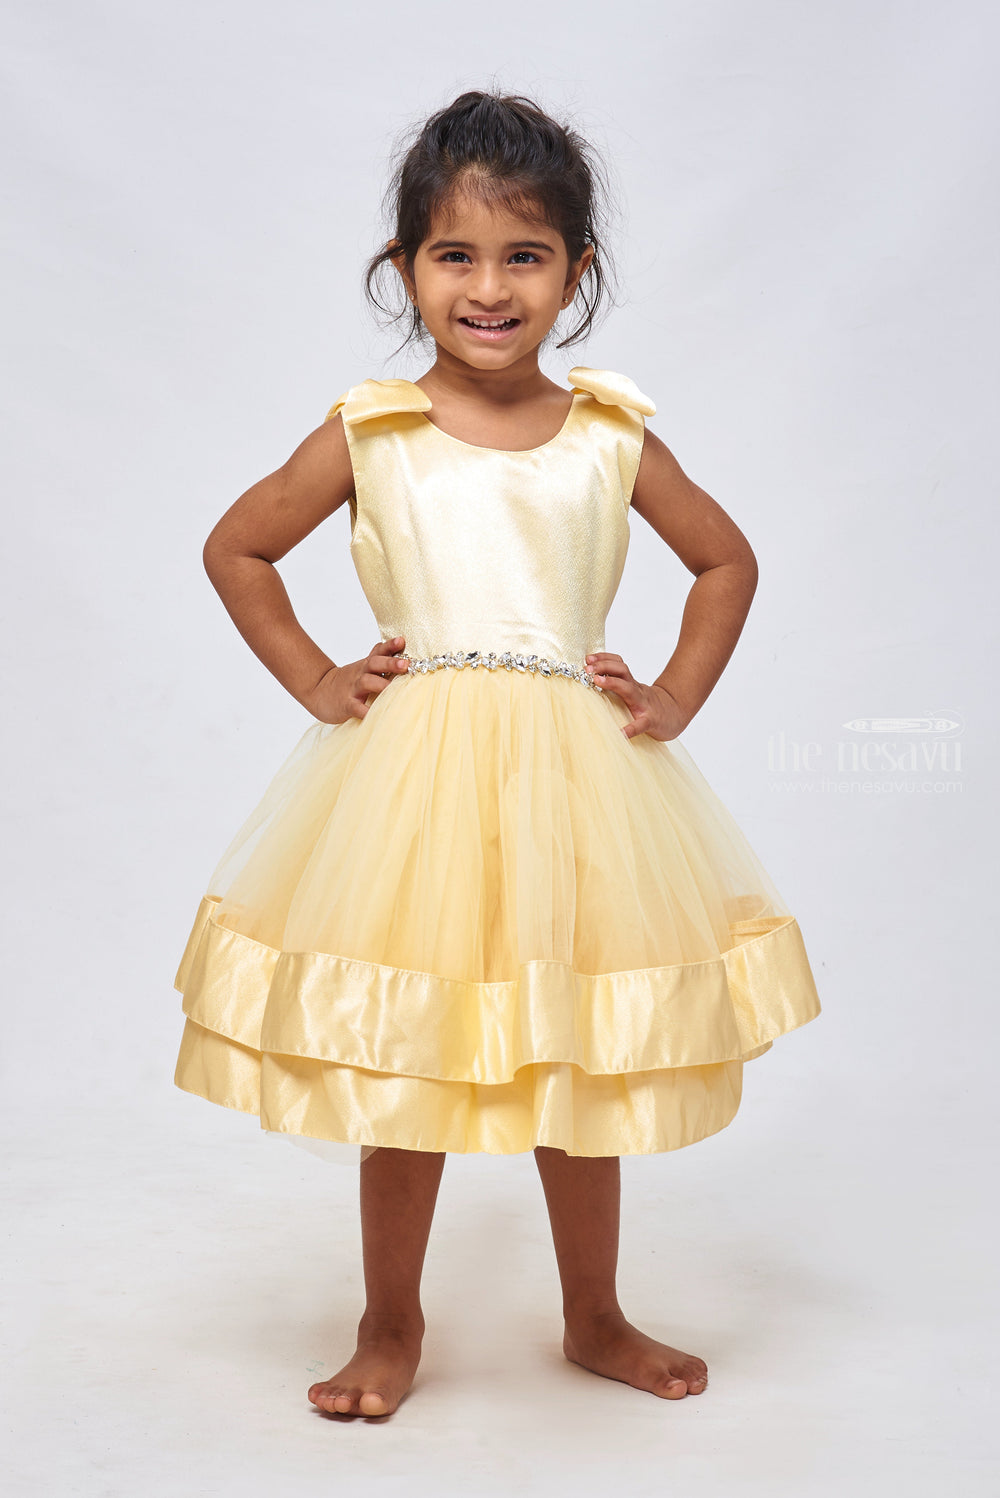 The Nesavu Girls Tutu Frock Sunshine Dream: Double-Layered Net Party Dress with Bow Accents for Girls Nesavu Fancy Dress for 3-Year-Old Birthday Girls | Elegant Frocks | The Nesavu